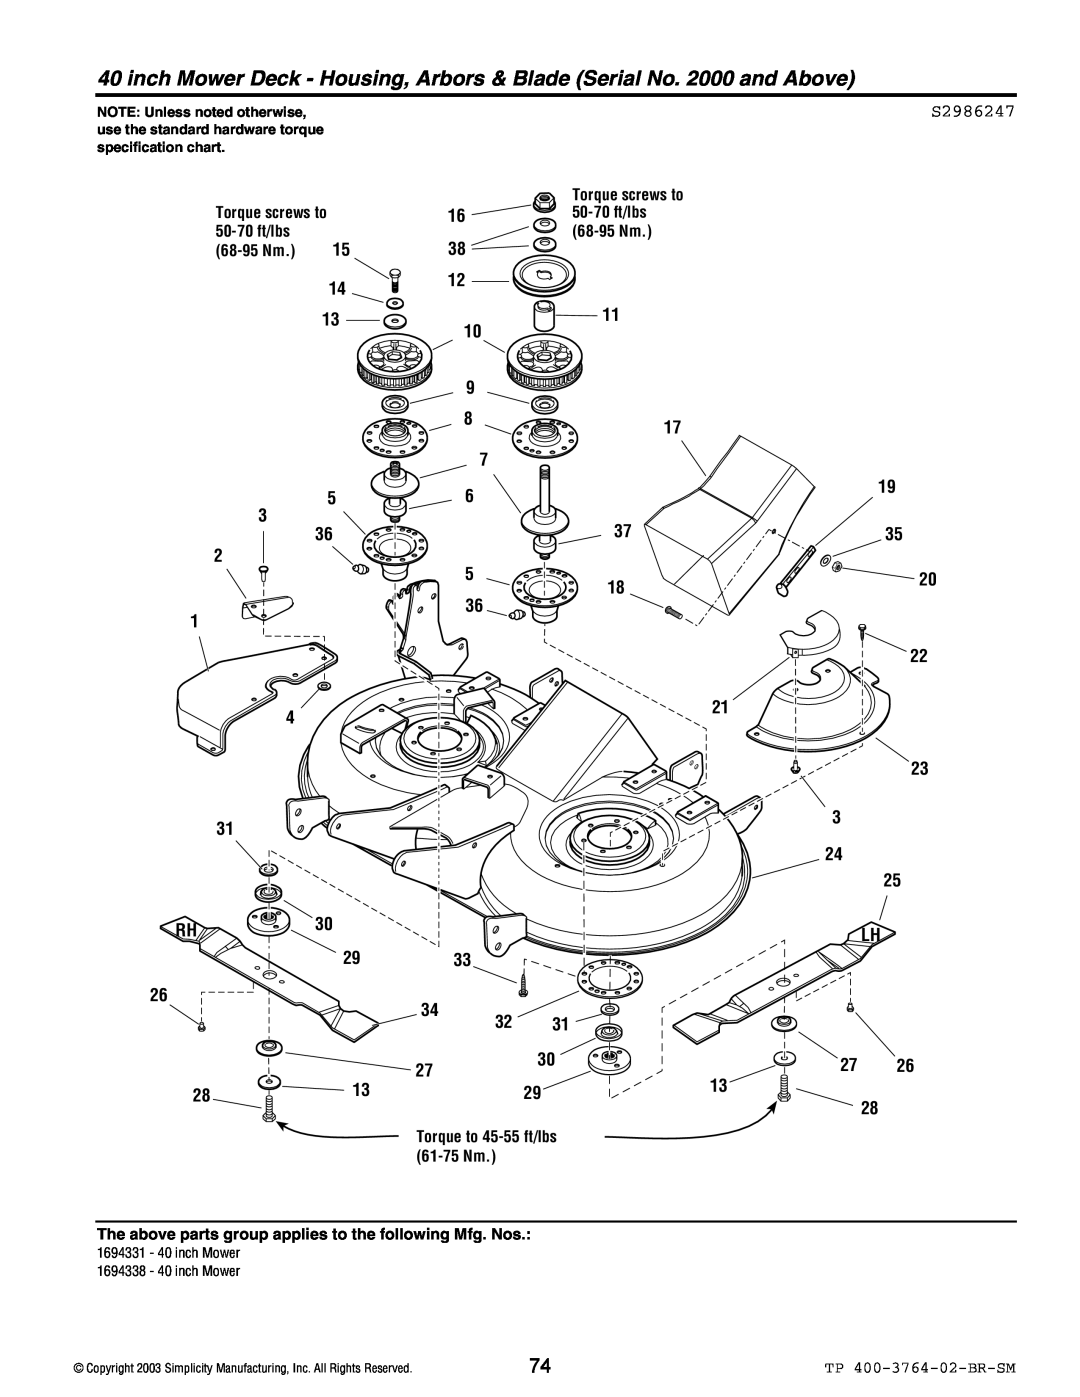 Simplicity Baron / 2400 manual S2986247, Torque screws to, 50-70 ft/lbs, 68-95 Nm, Torque to 45-55 ft/lbs, 61-75 Nm, 1338 